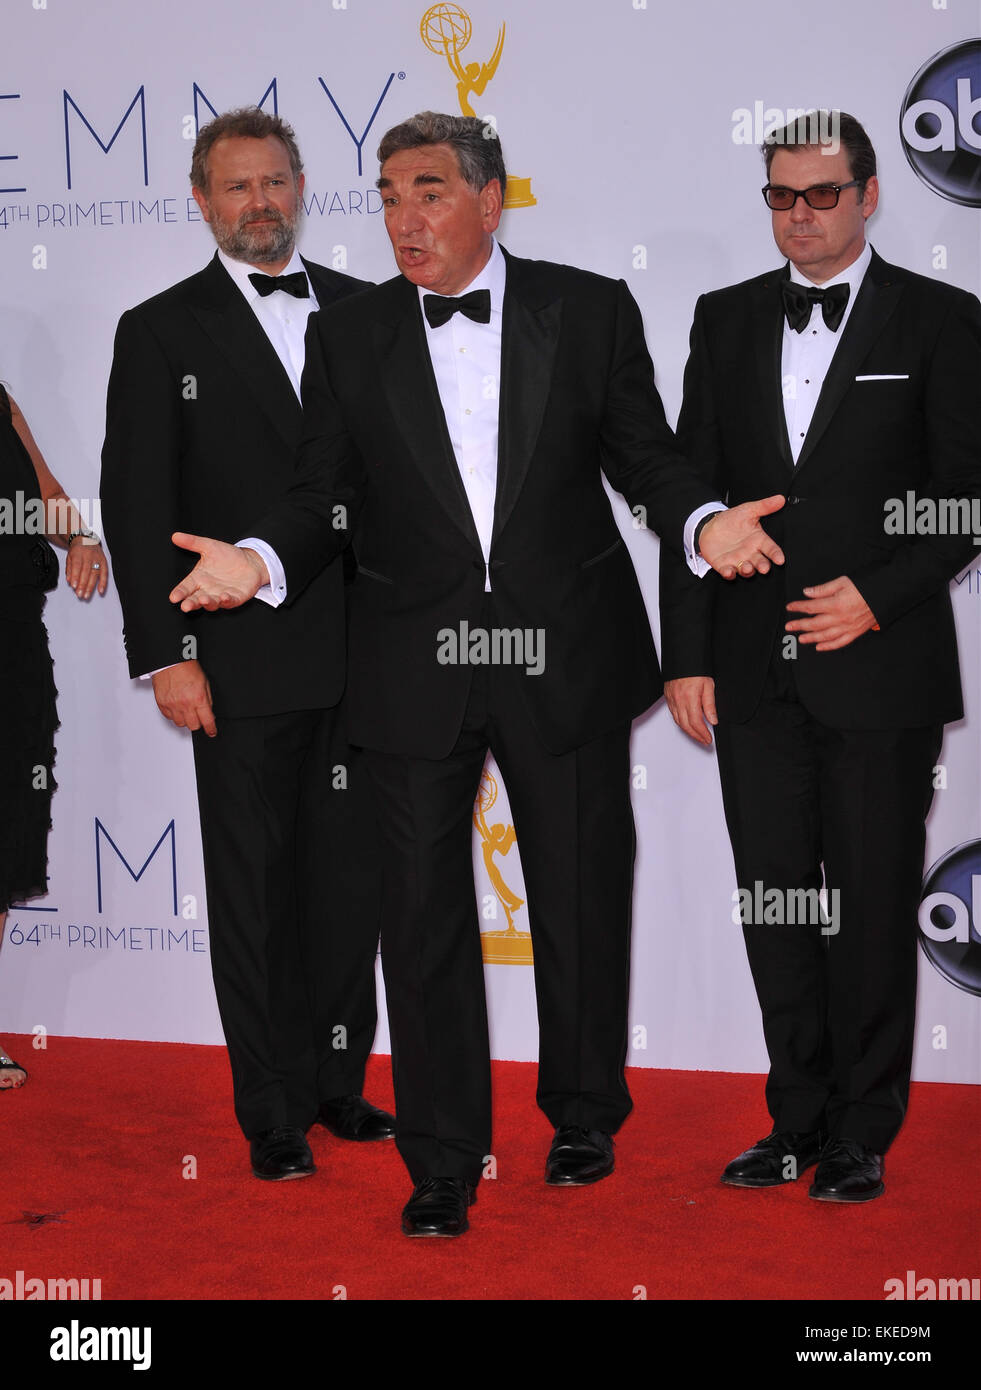 LOS ANGELES, CA - SEPTEMBER 23, 2012: Downton Abbey stars Hugh Bonneville, Brendan Coyle & Jim Carter at the 64th Primetime Emmy Awards at the Nokia Theatre LA Live. Stock Photo